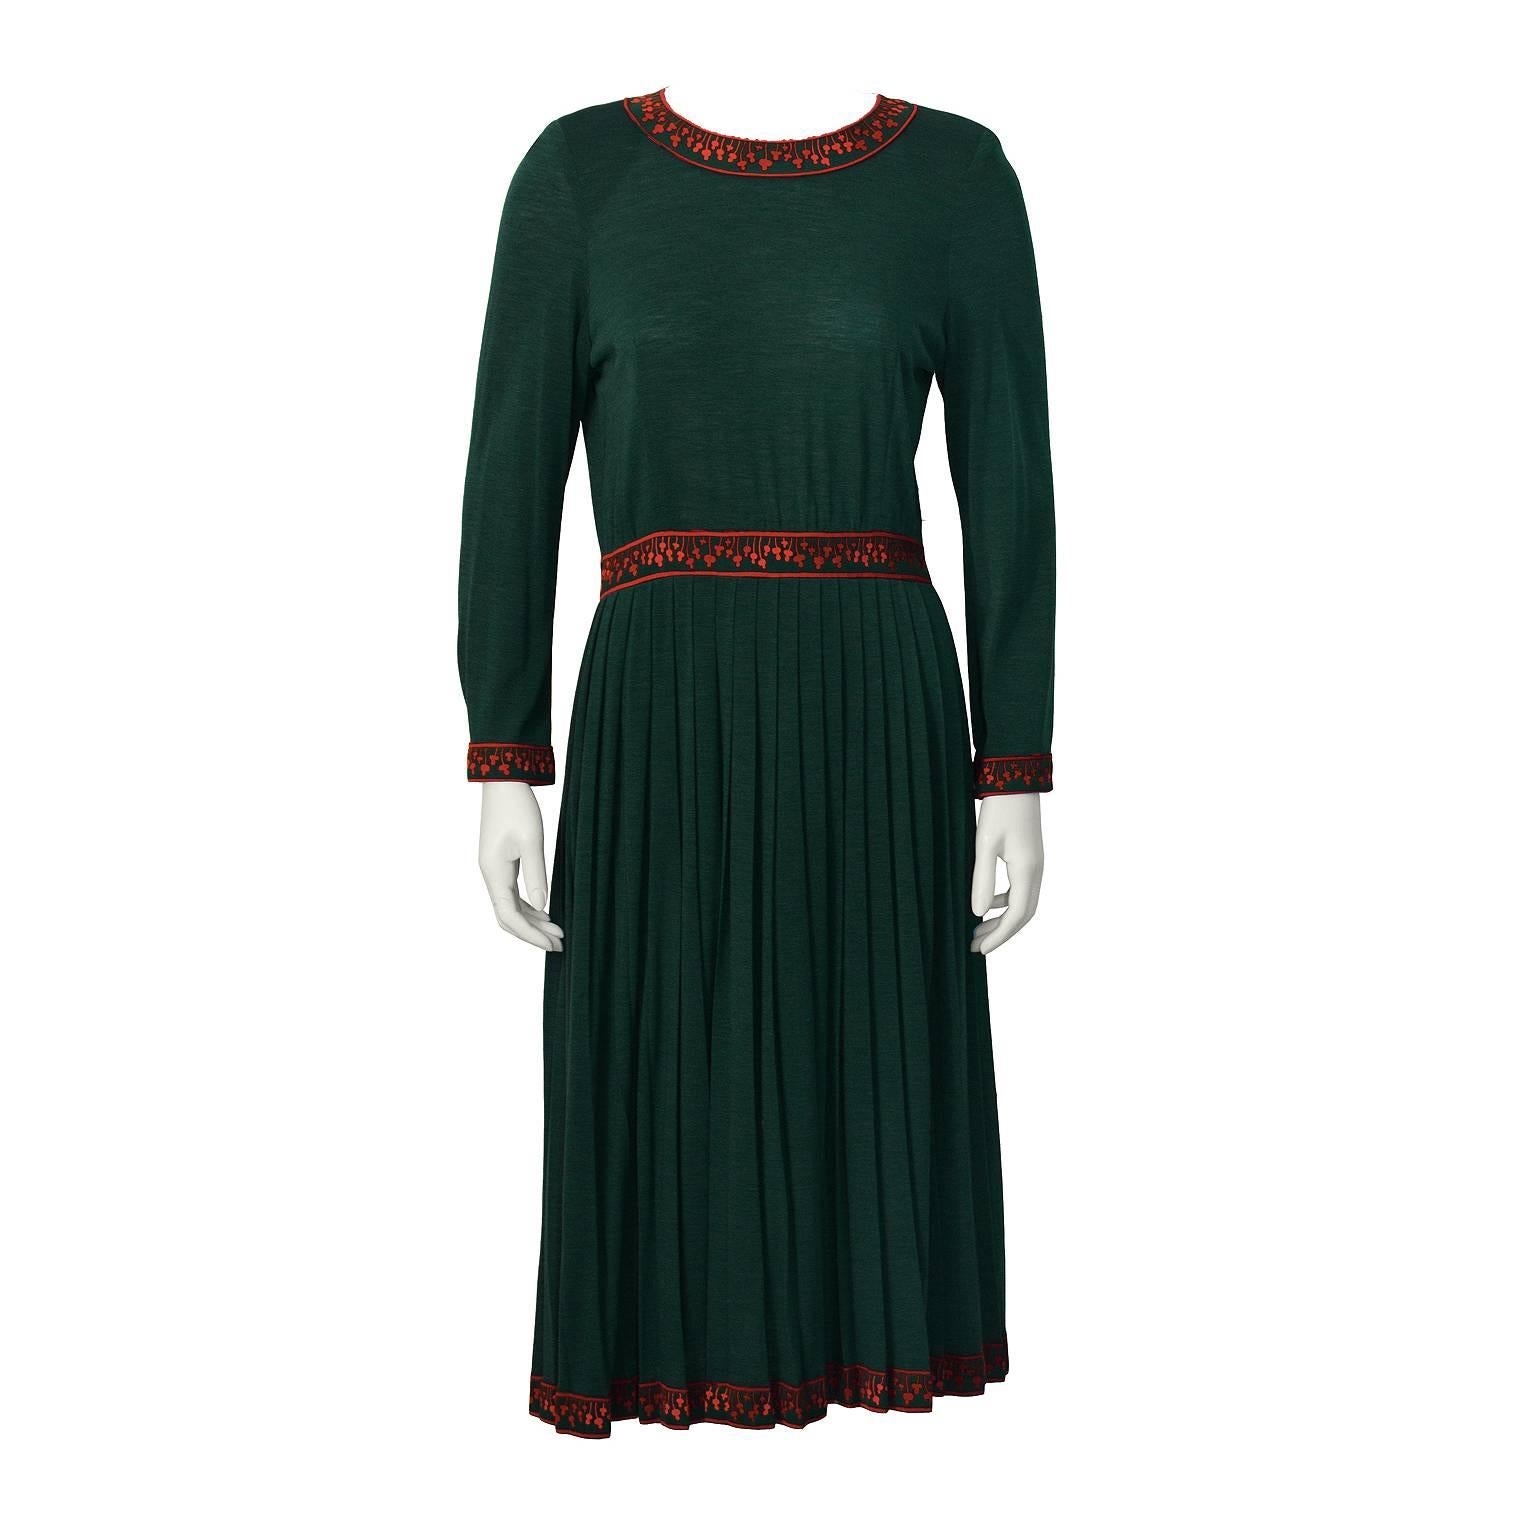 1970's Bessi Green Dress with Fushia Trim